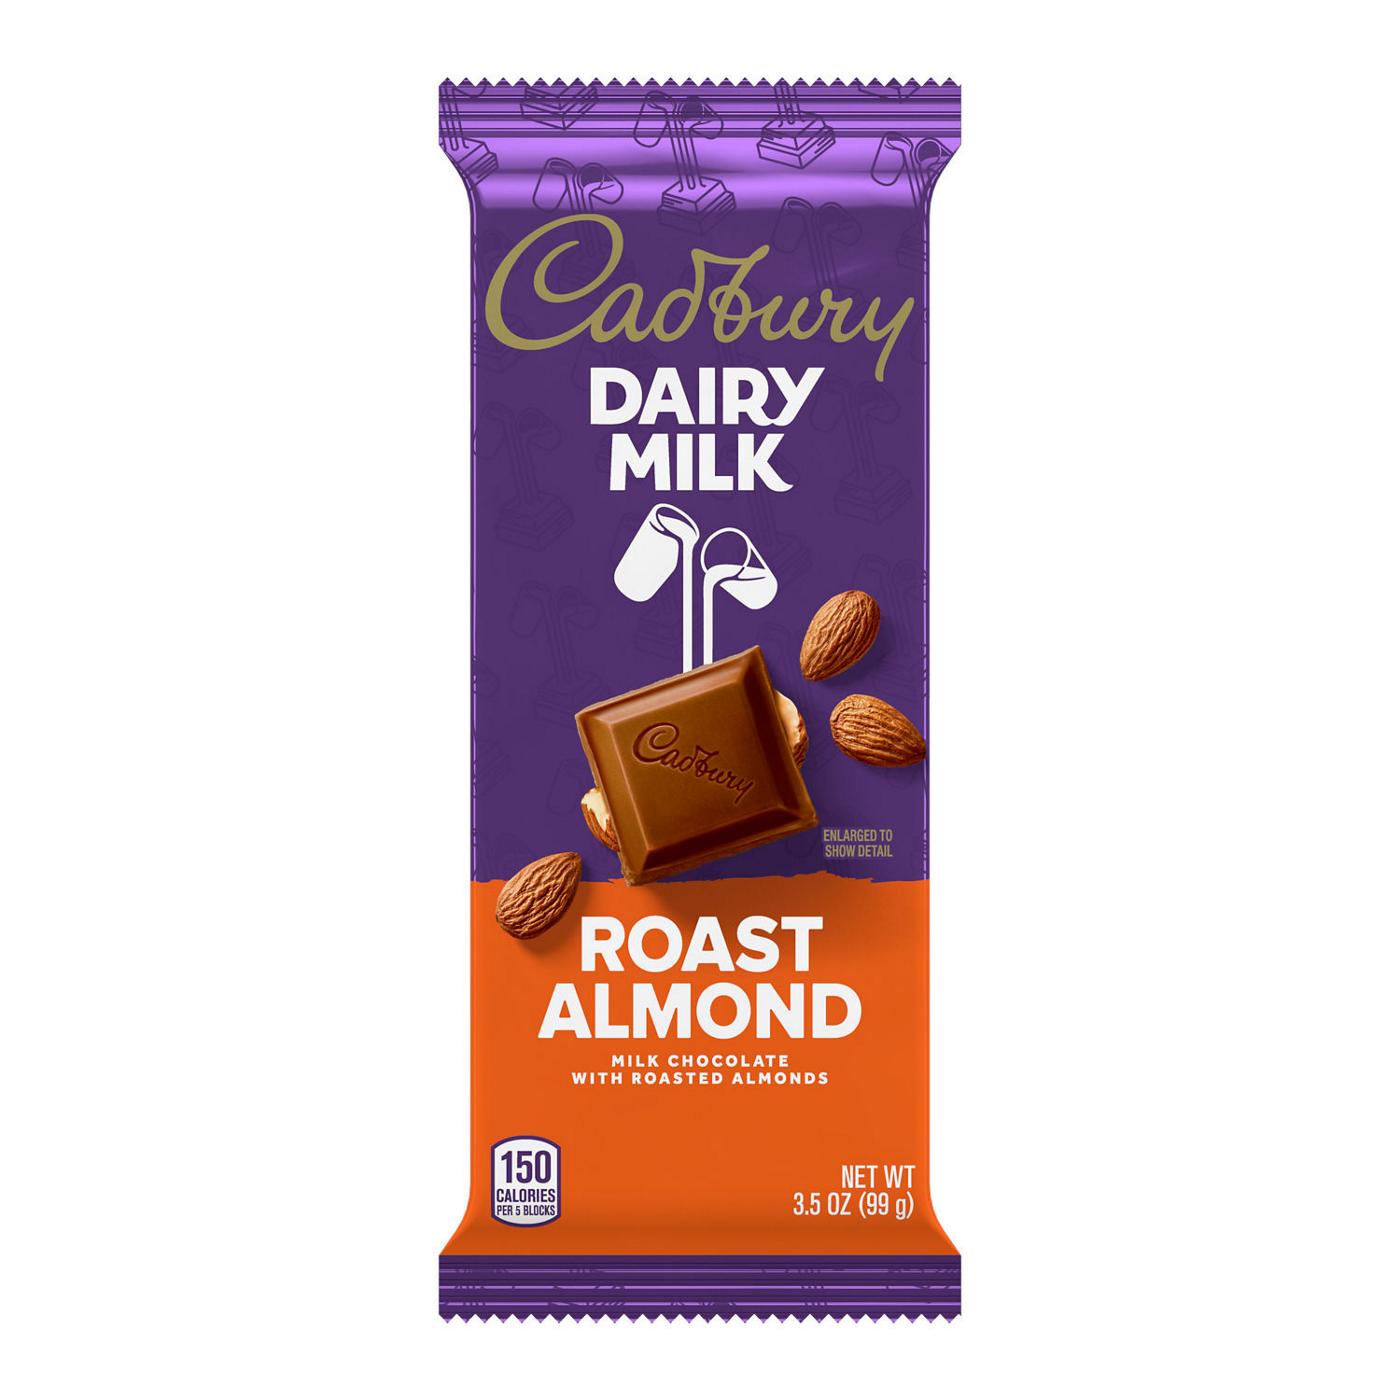 Cadbury Dairy Milk Roast Almond Milk Chocolate Candy Bar; image 1 of 5